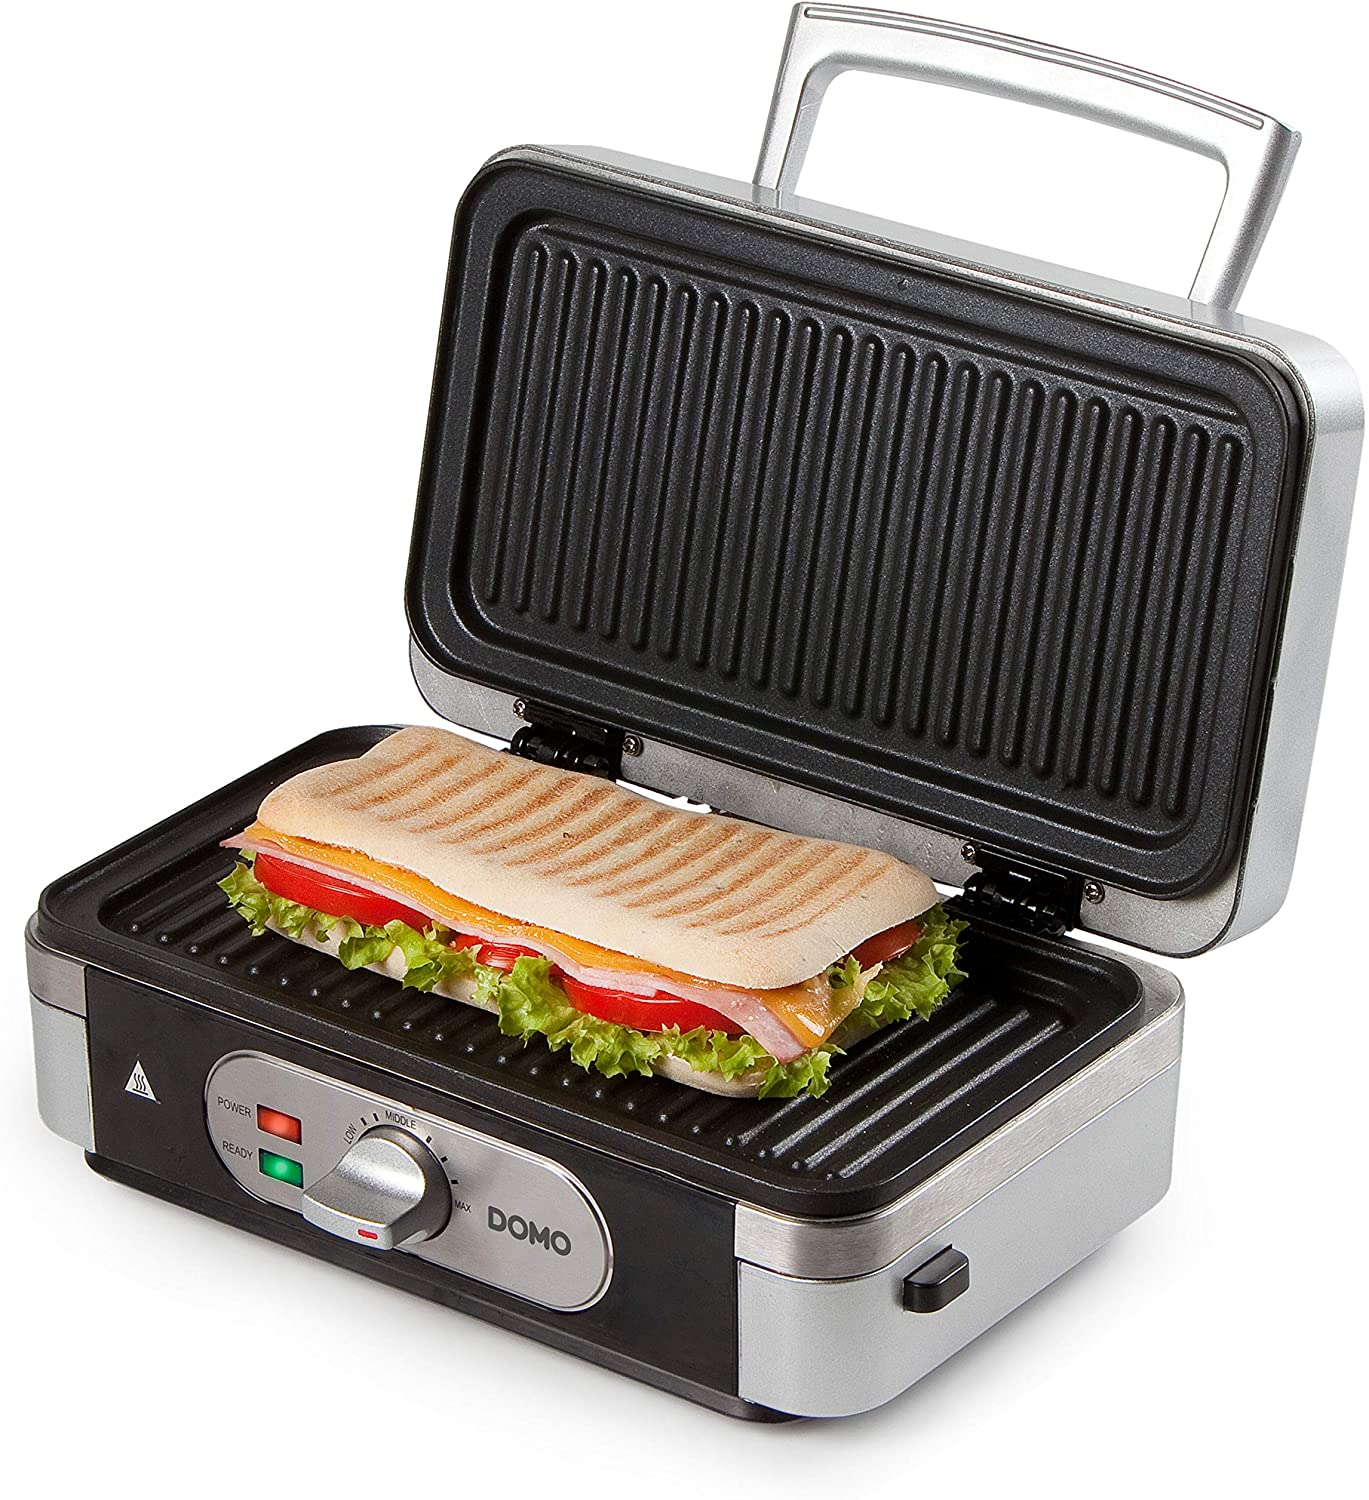 Domo DO9136C 3-in-1 Sandwich Toaster, 1 Litre, Silver, Black